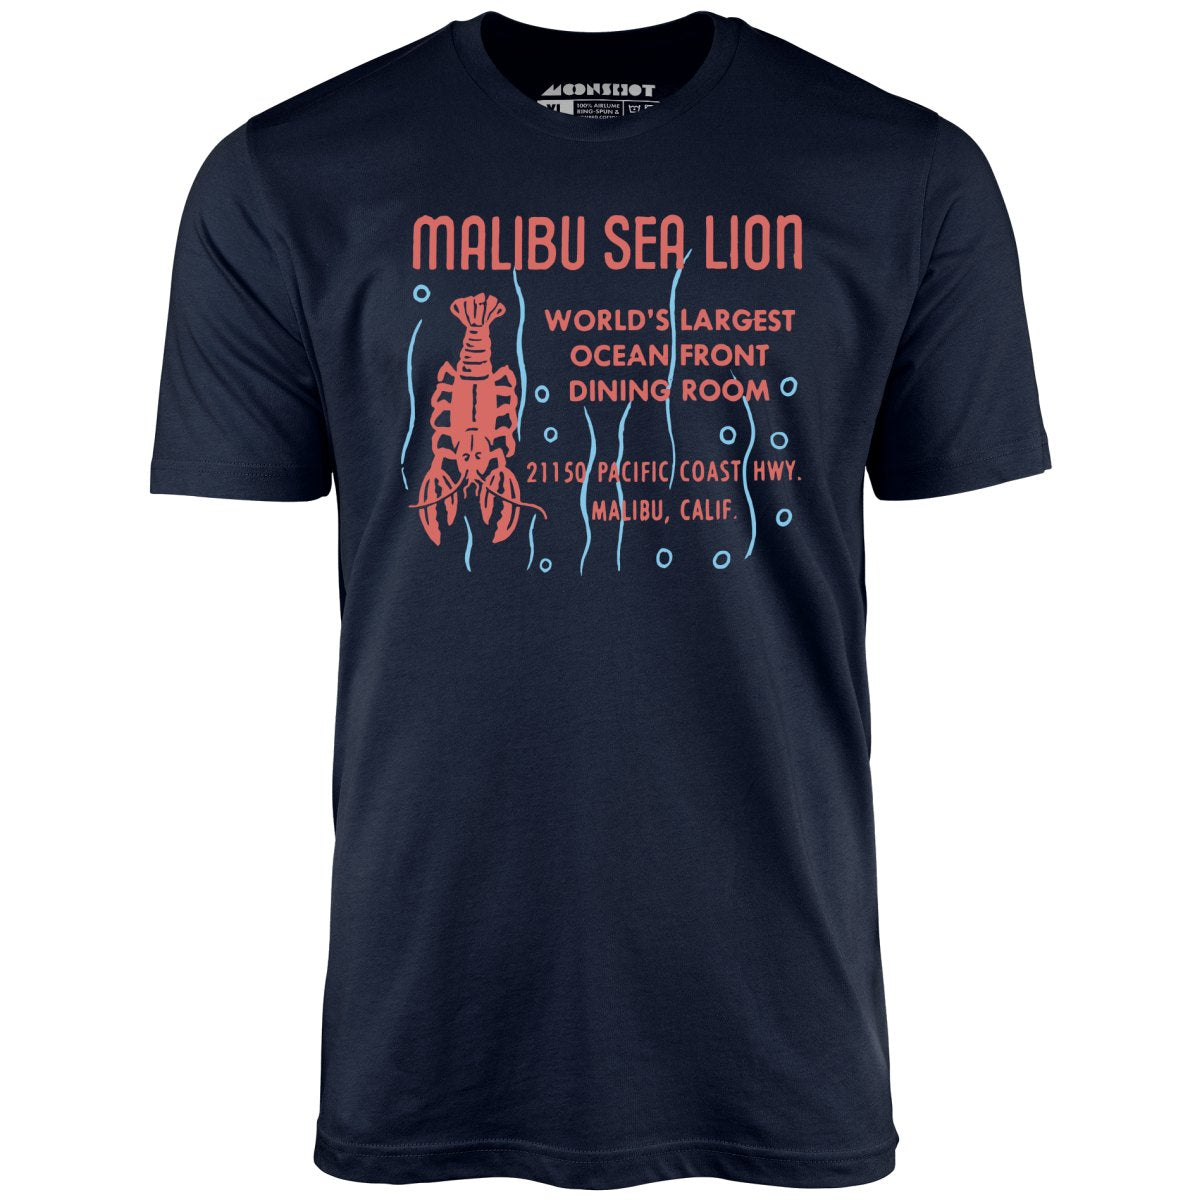 Malibu Sea Lion - Malibu, CA - Vintage Restaurant - Unisex T-Shirt